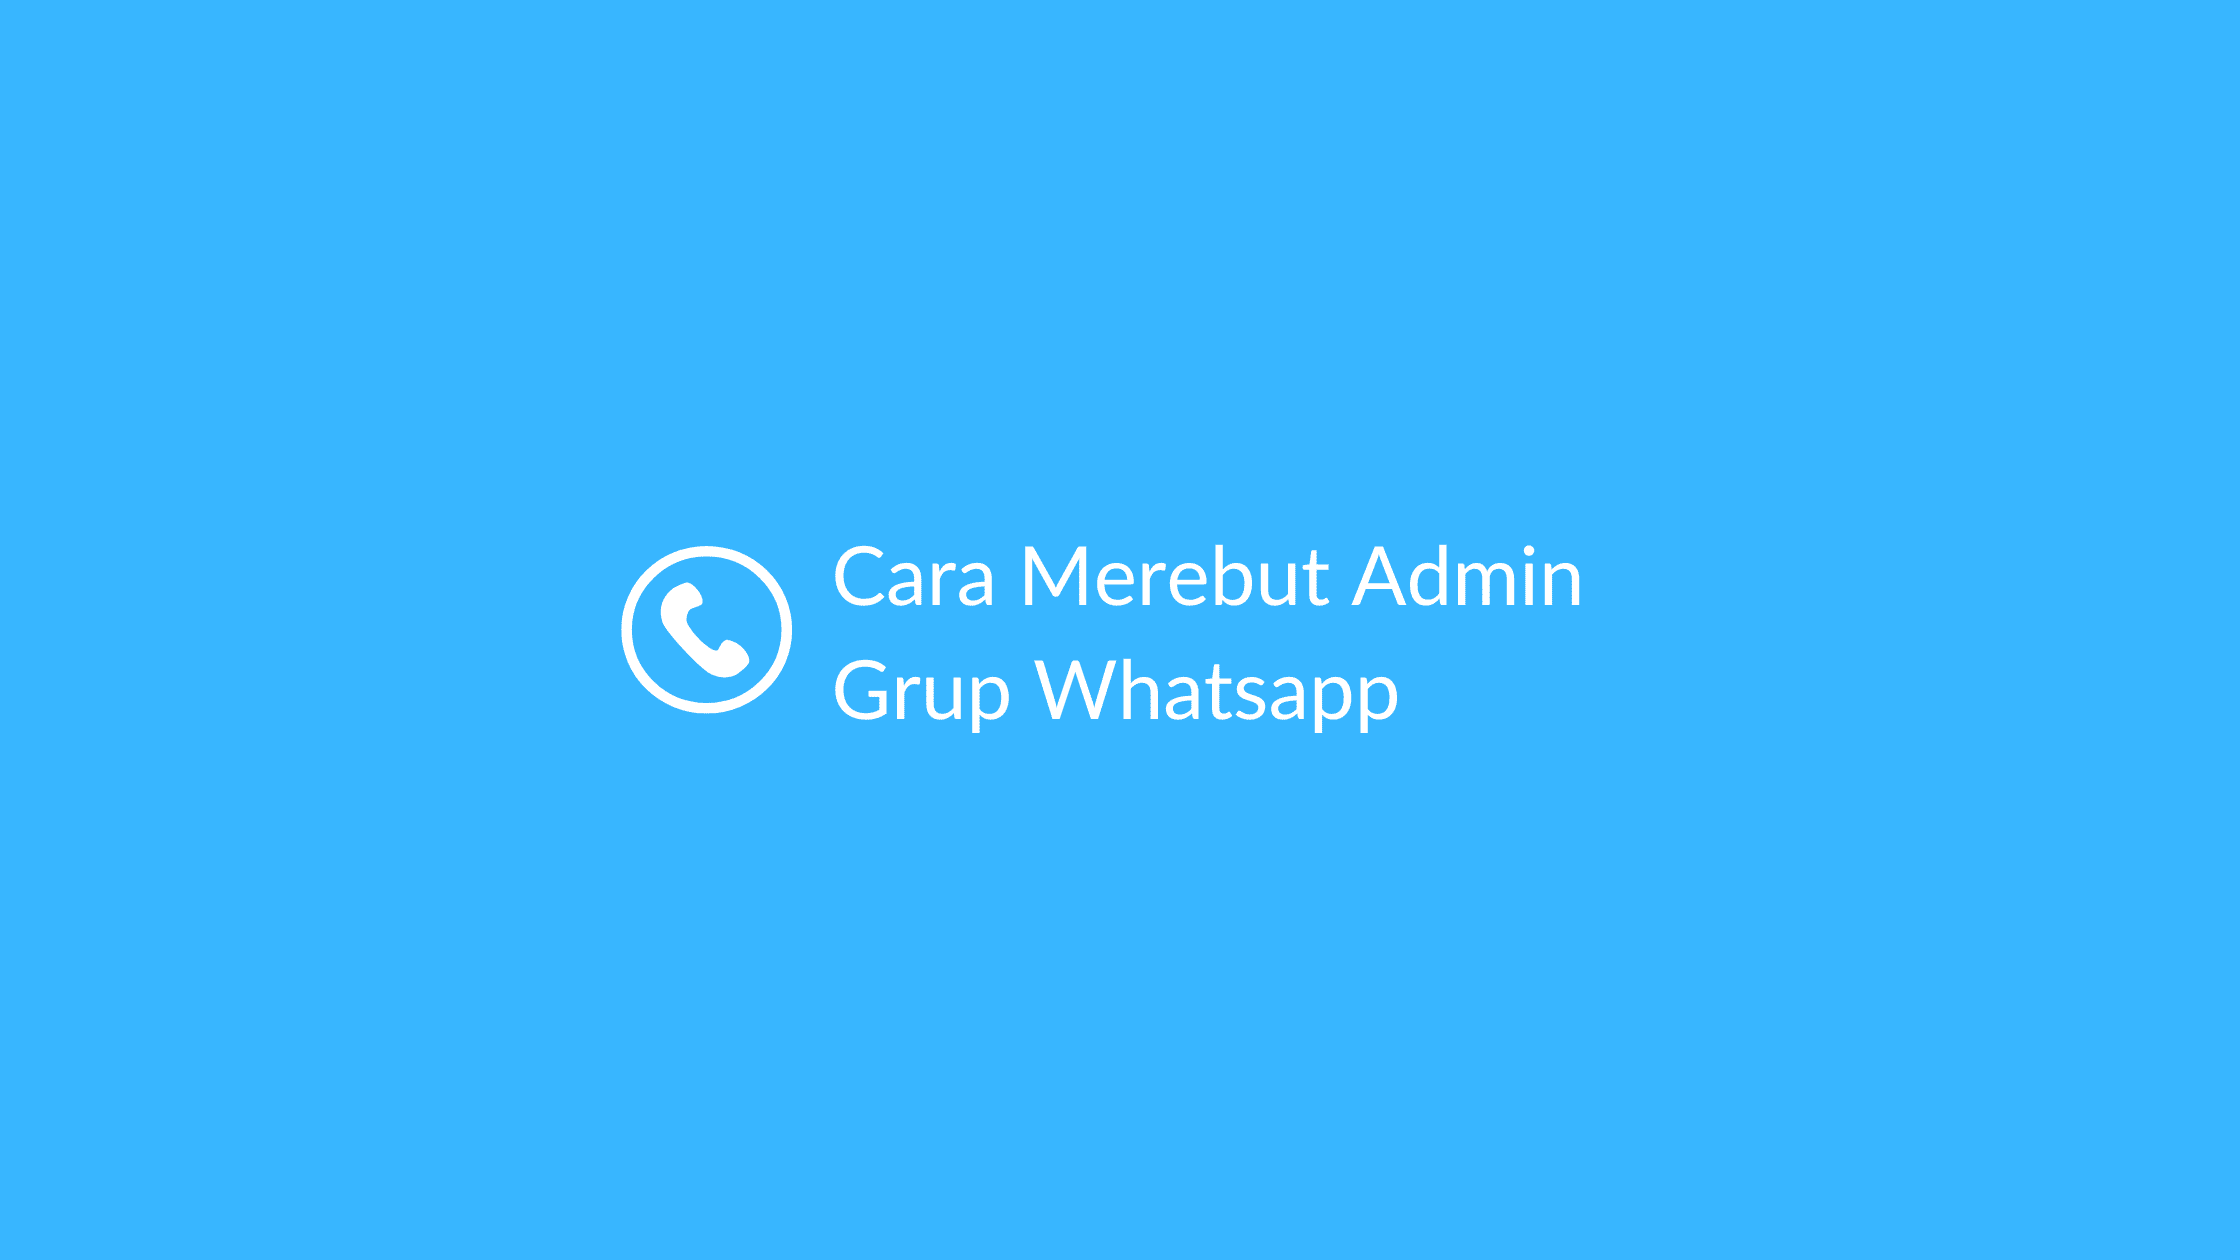 Cara Merebut Admin Grup Whatsapp